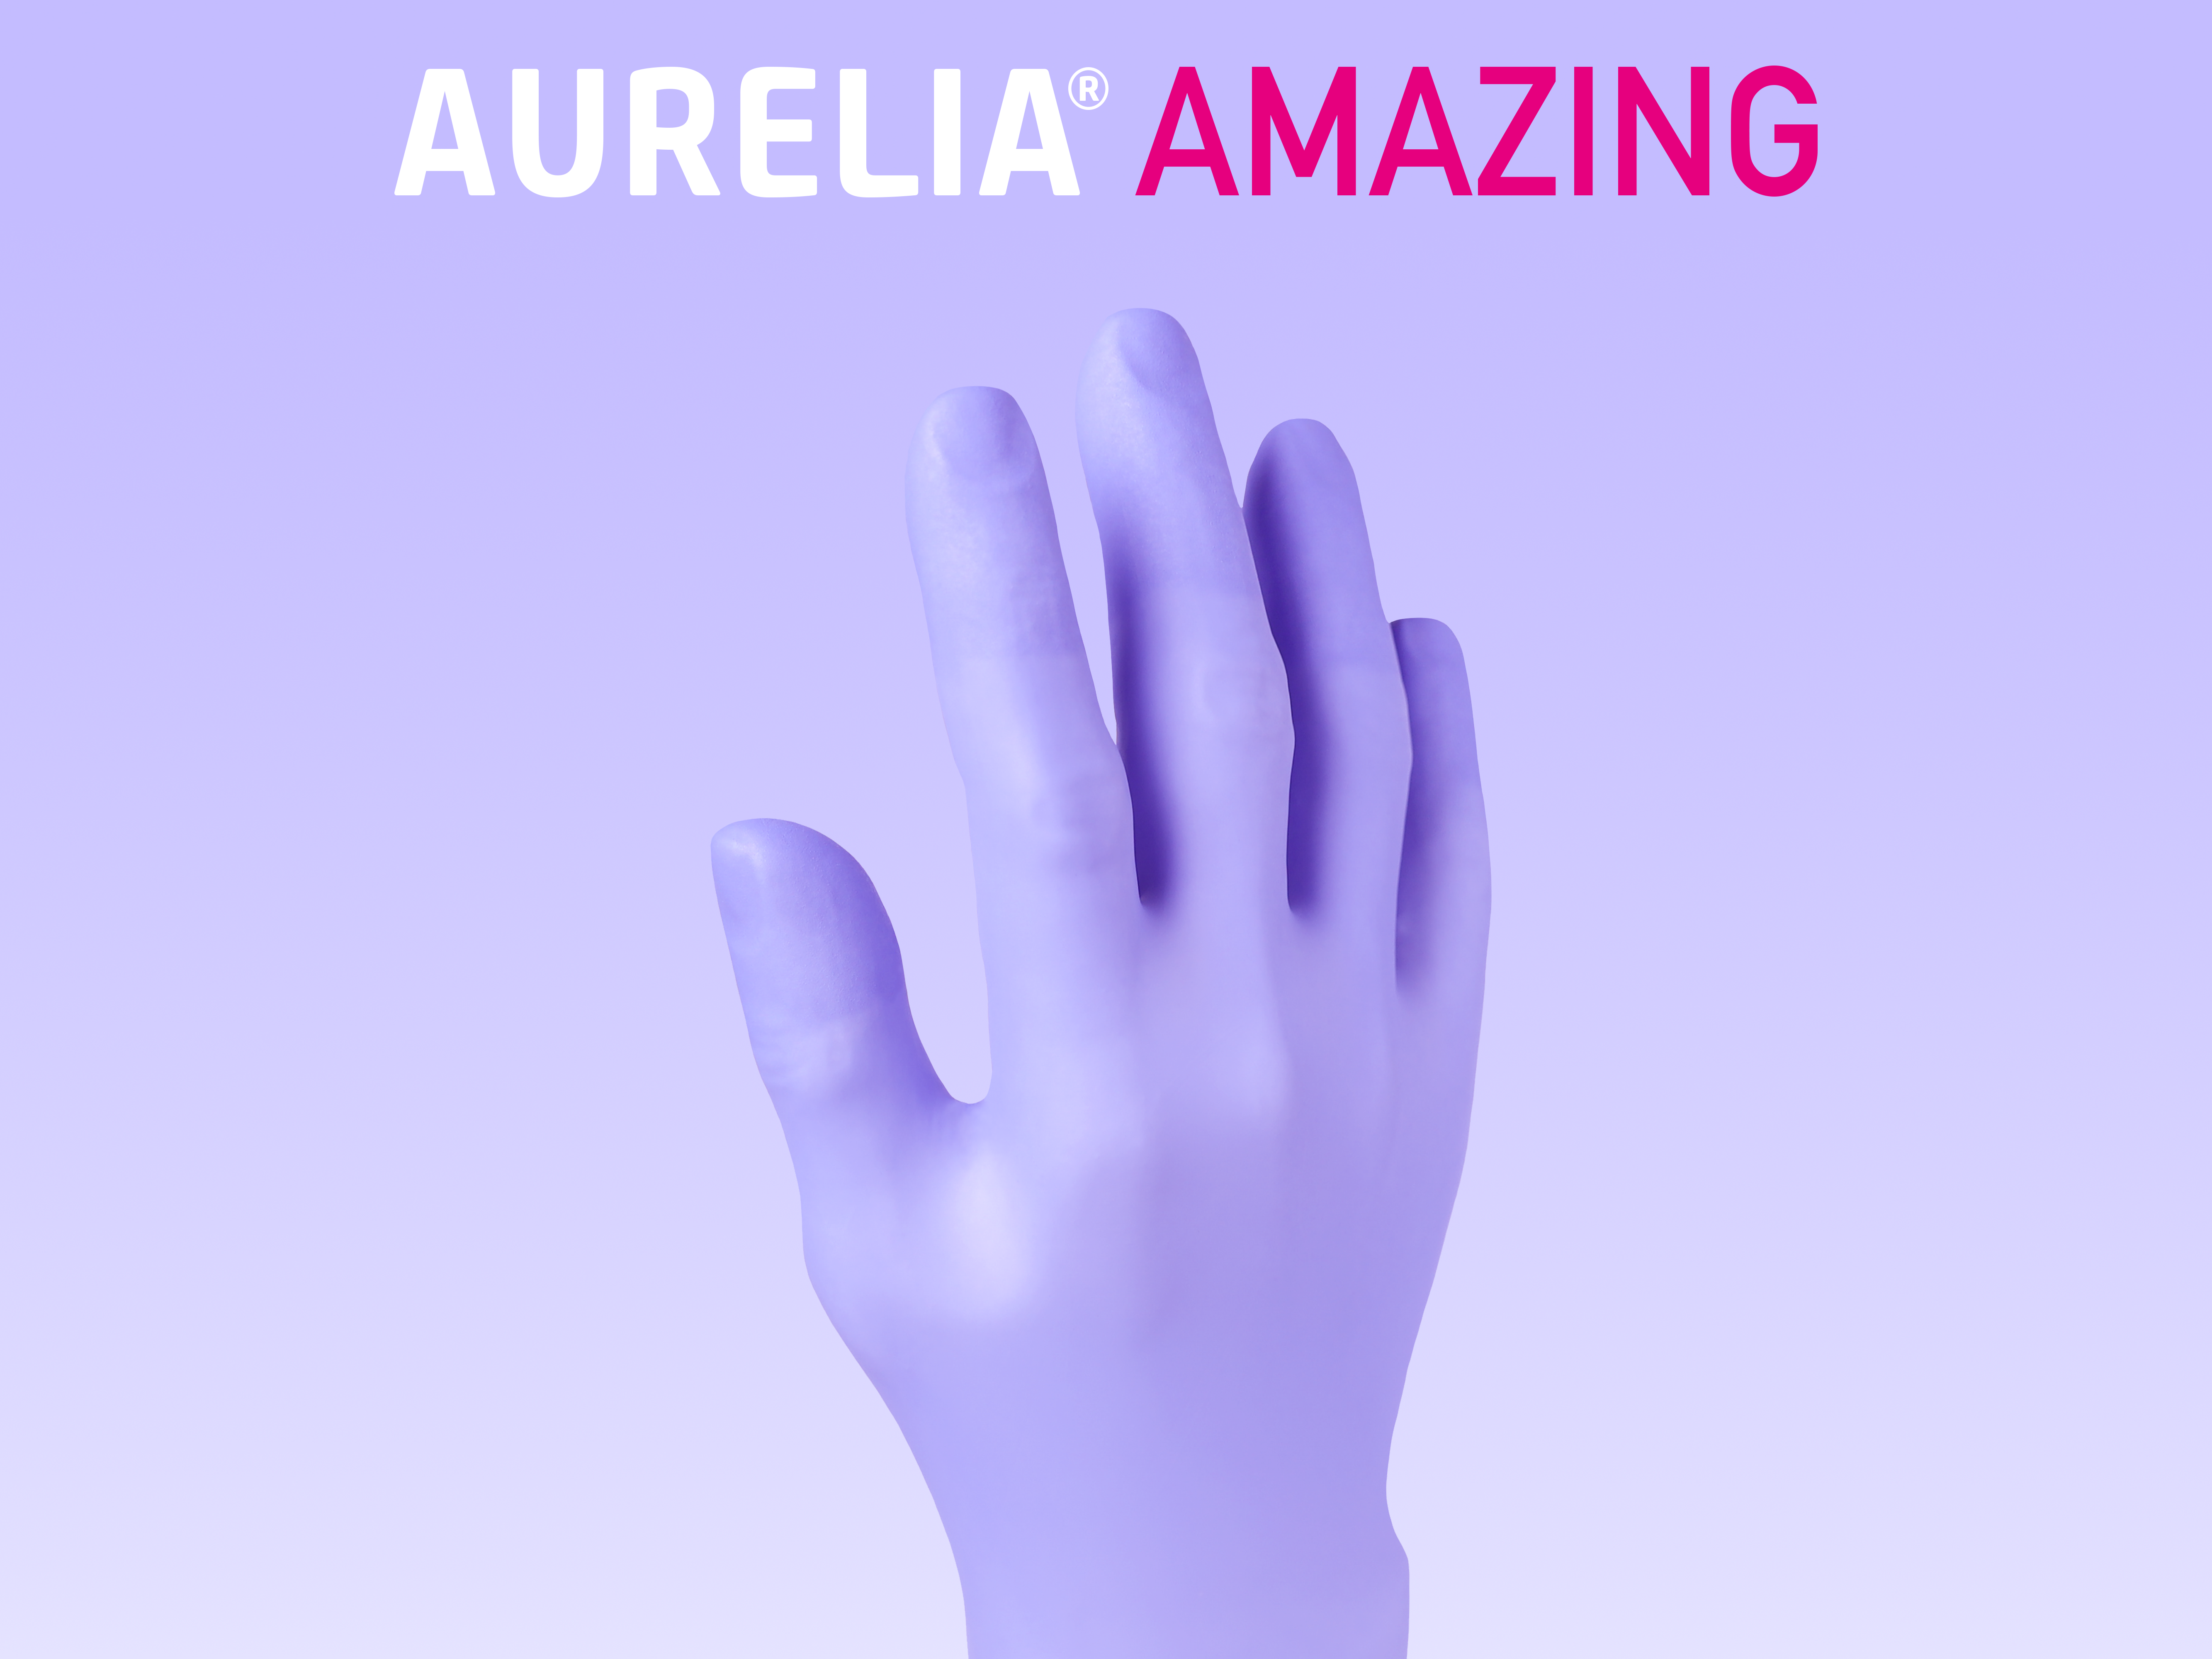 Aurelia Amazing Powder Free Nitrile Gloves